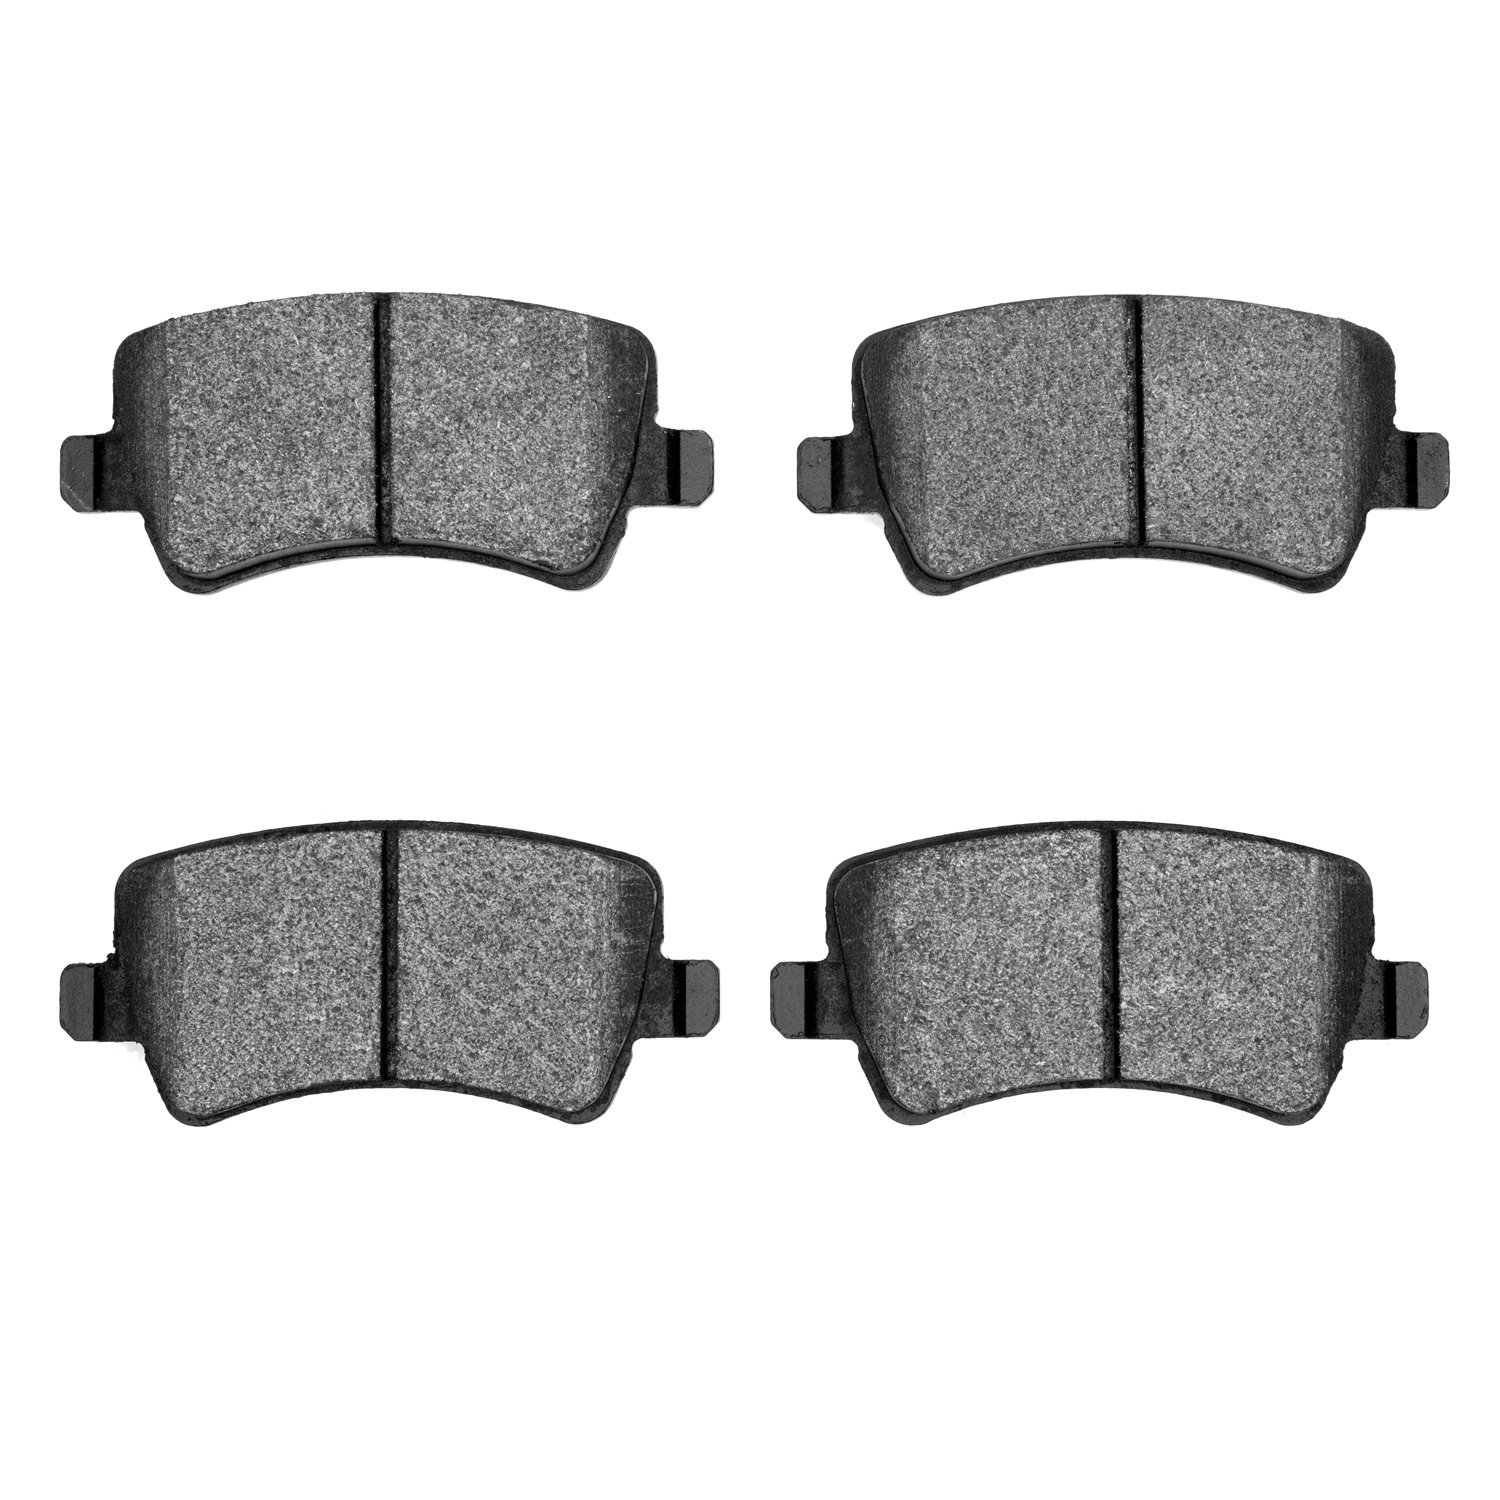 Ceramic Brake Pads, 2007-2018 Fits Multiple Makes/Models, Position: Rear